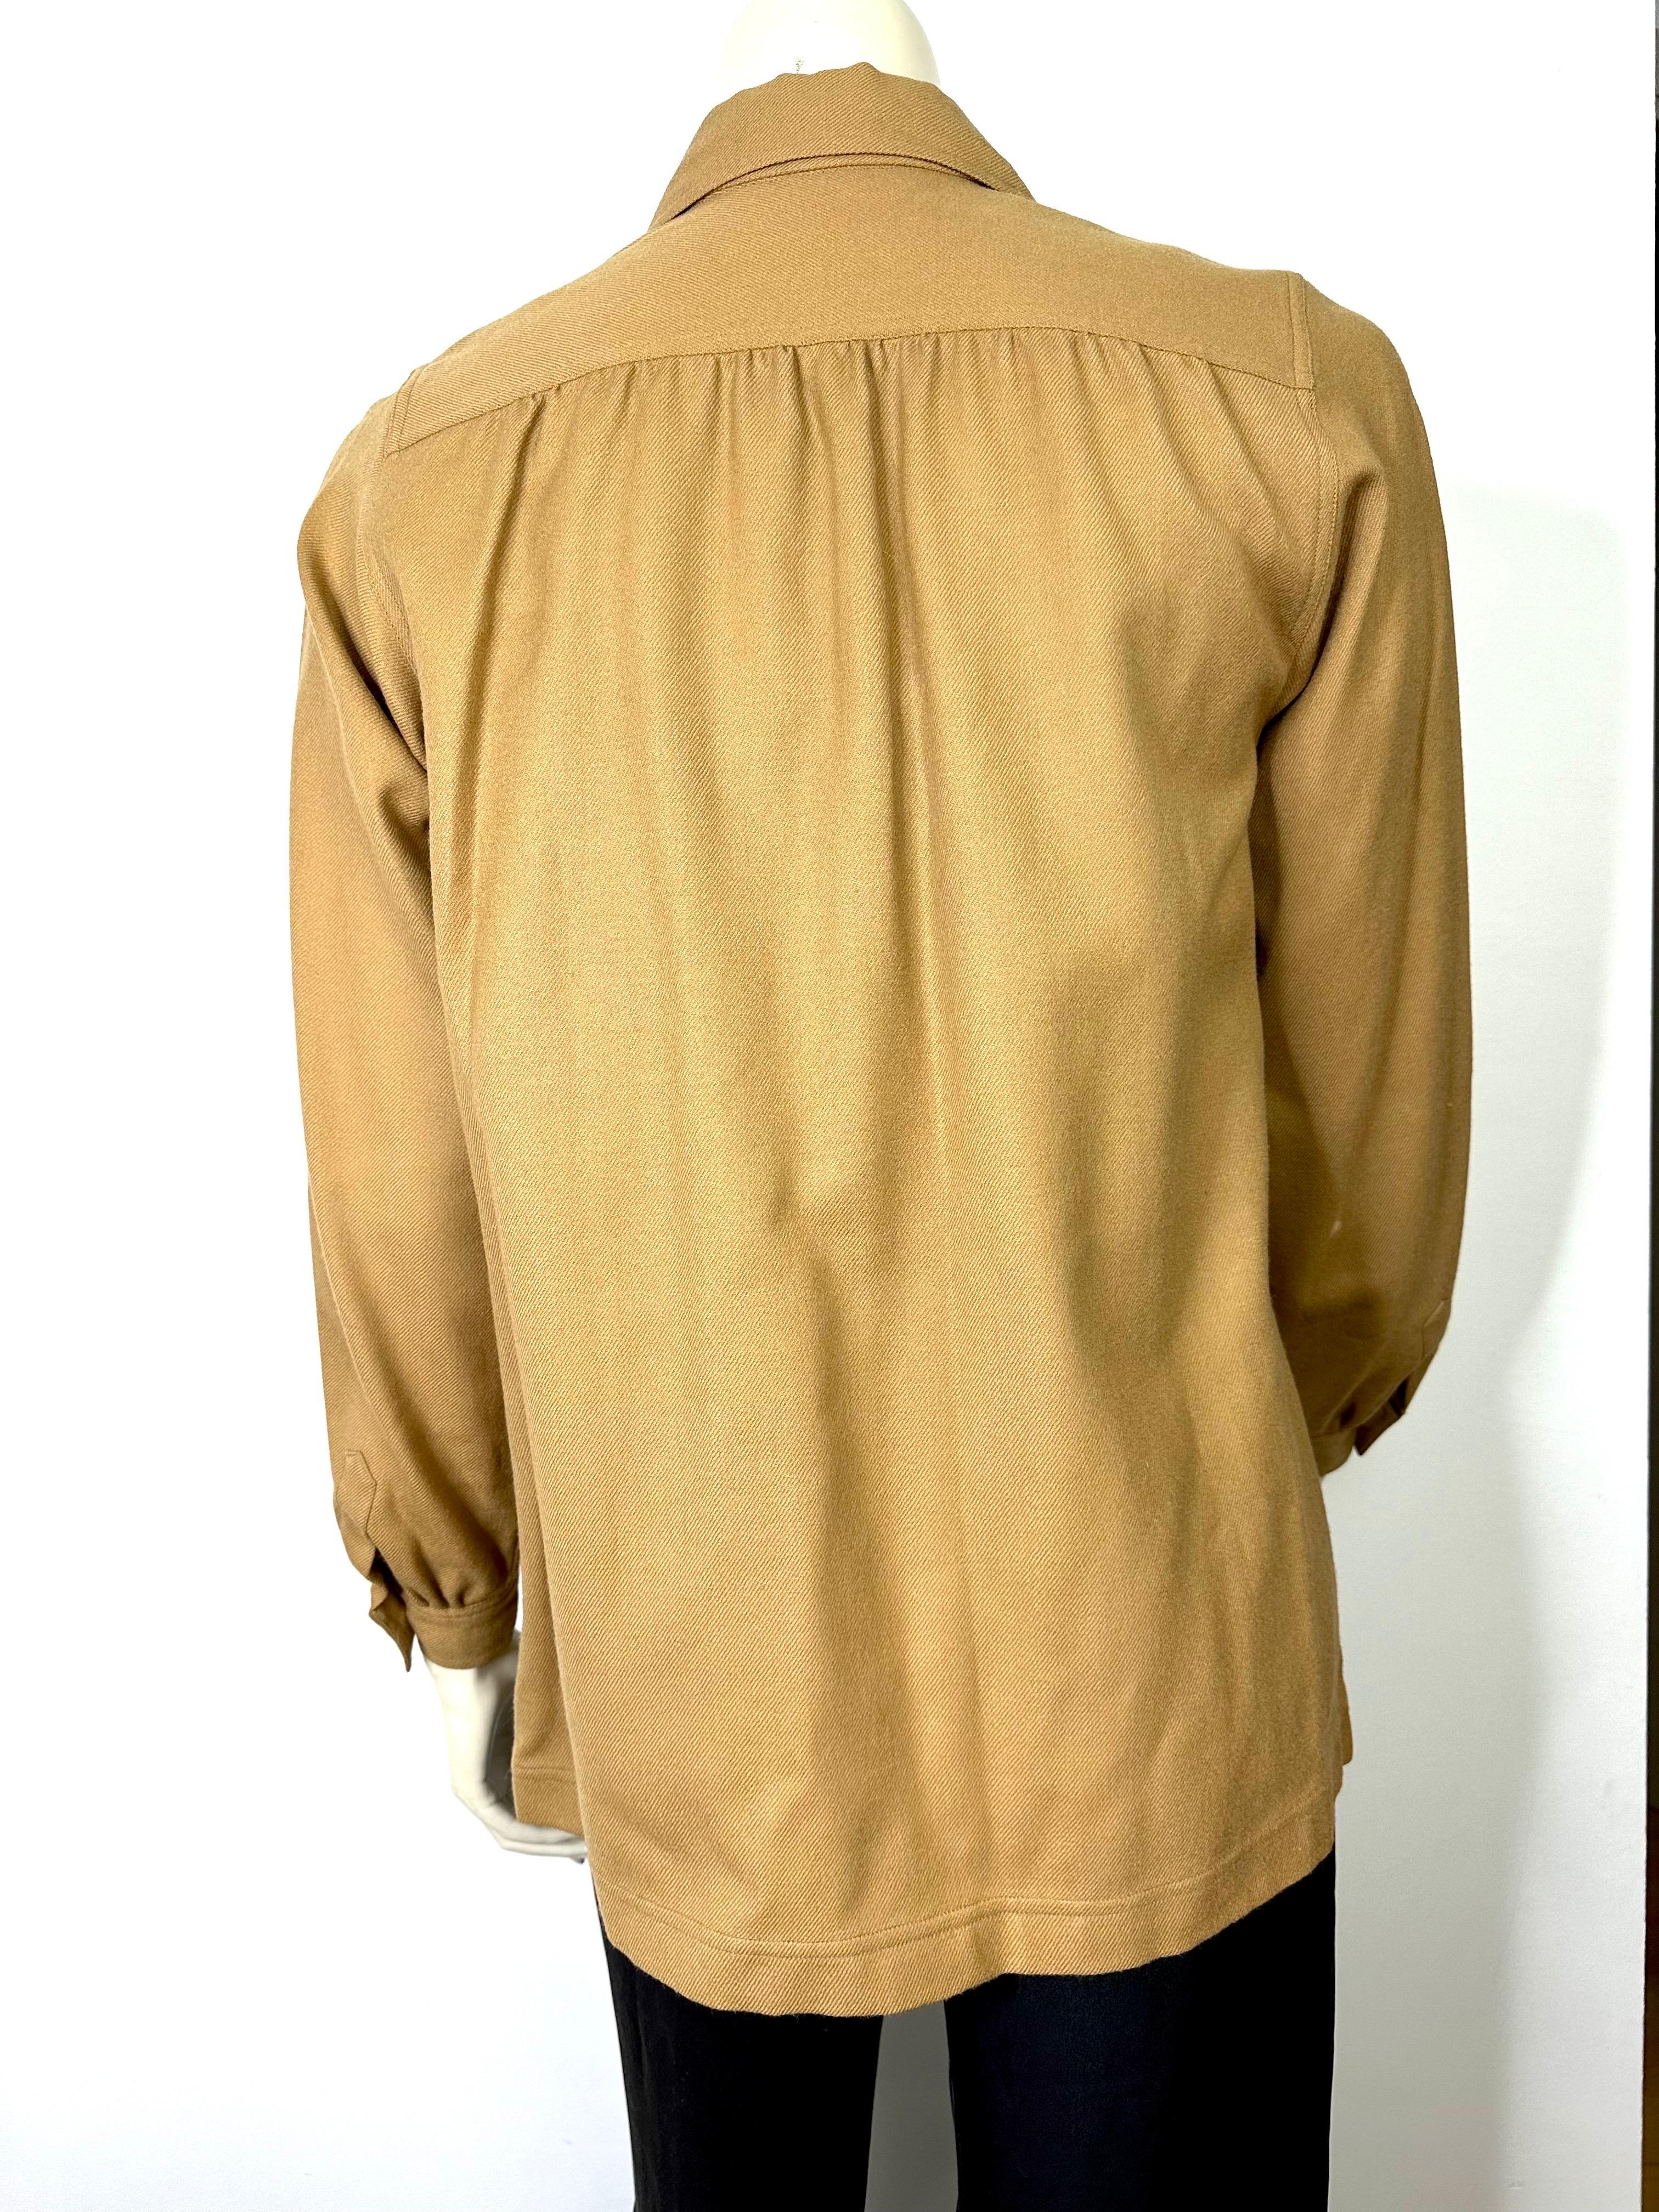 1970’s Yves saint Laurent vintage wool safari style shirt  For Sale 4